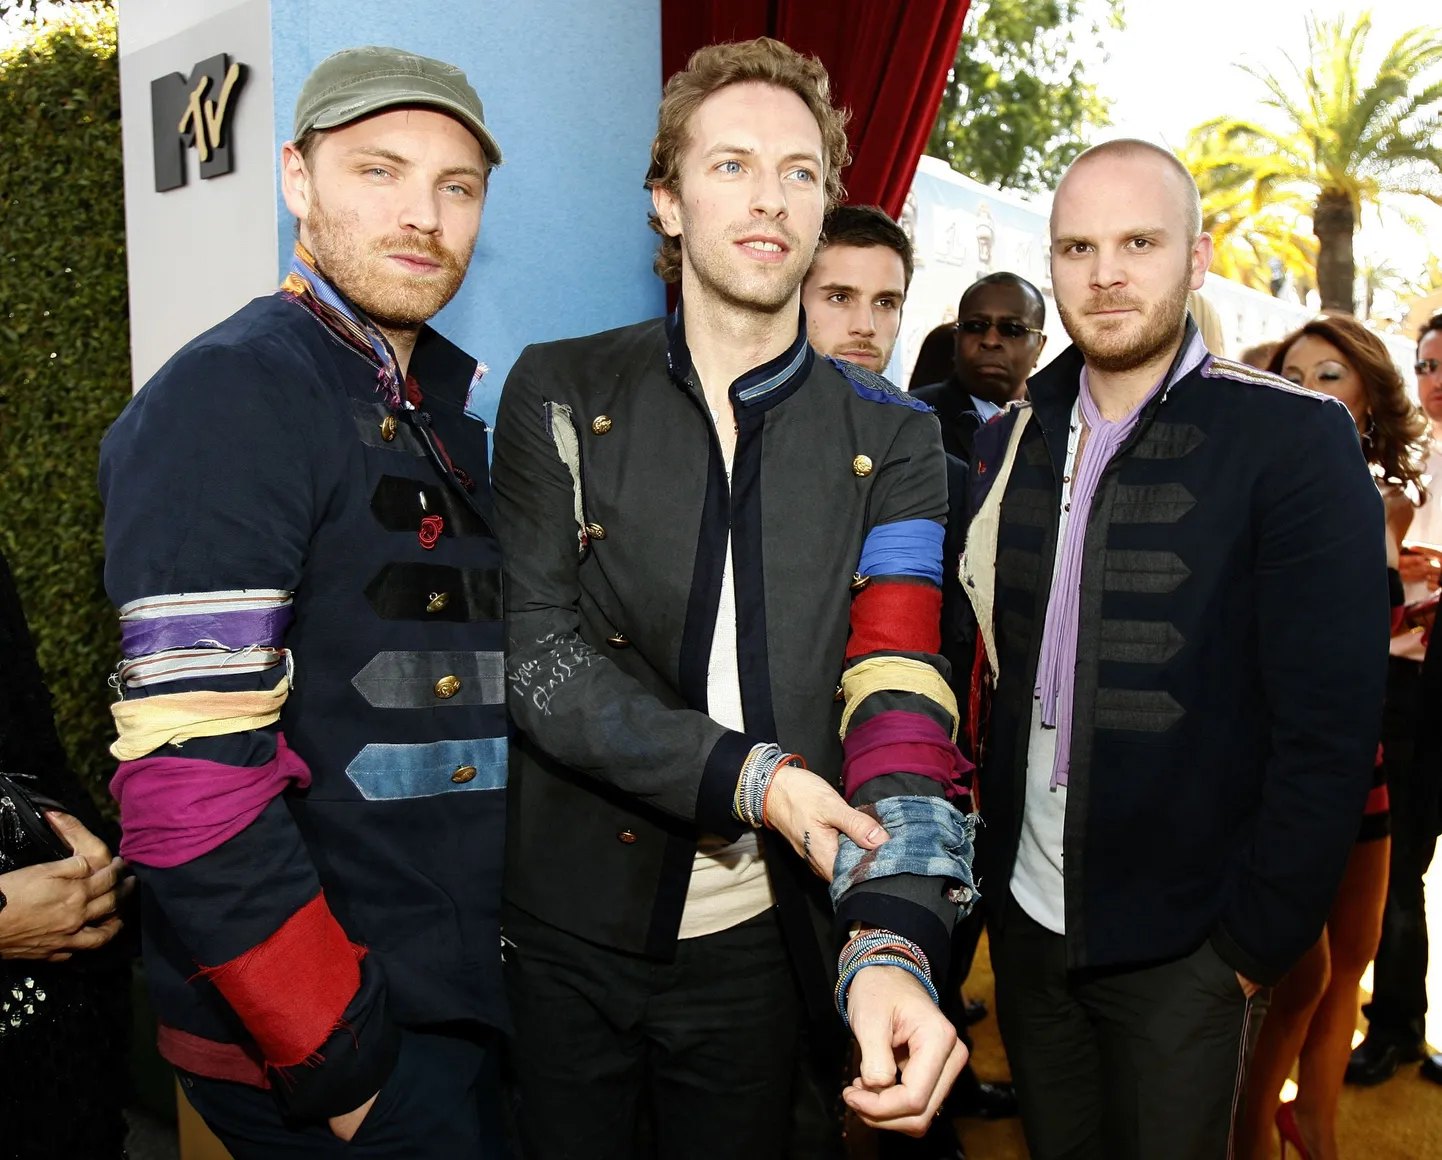 Ansambel Coldplay